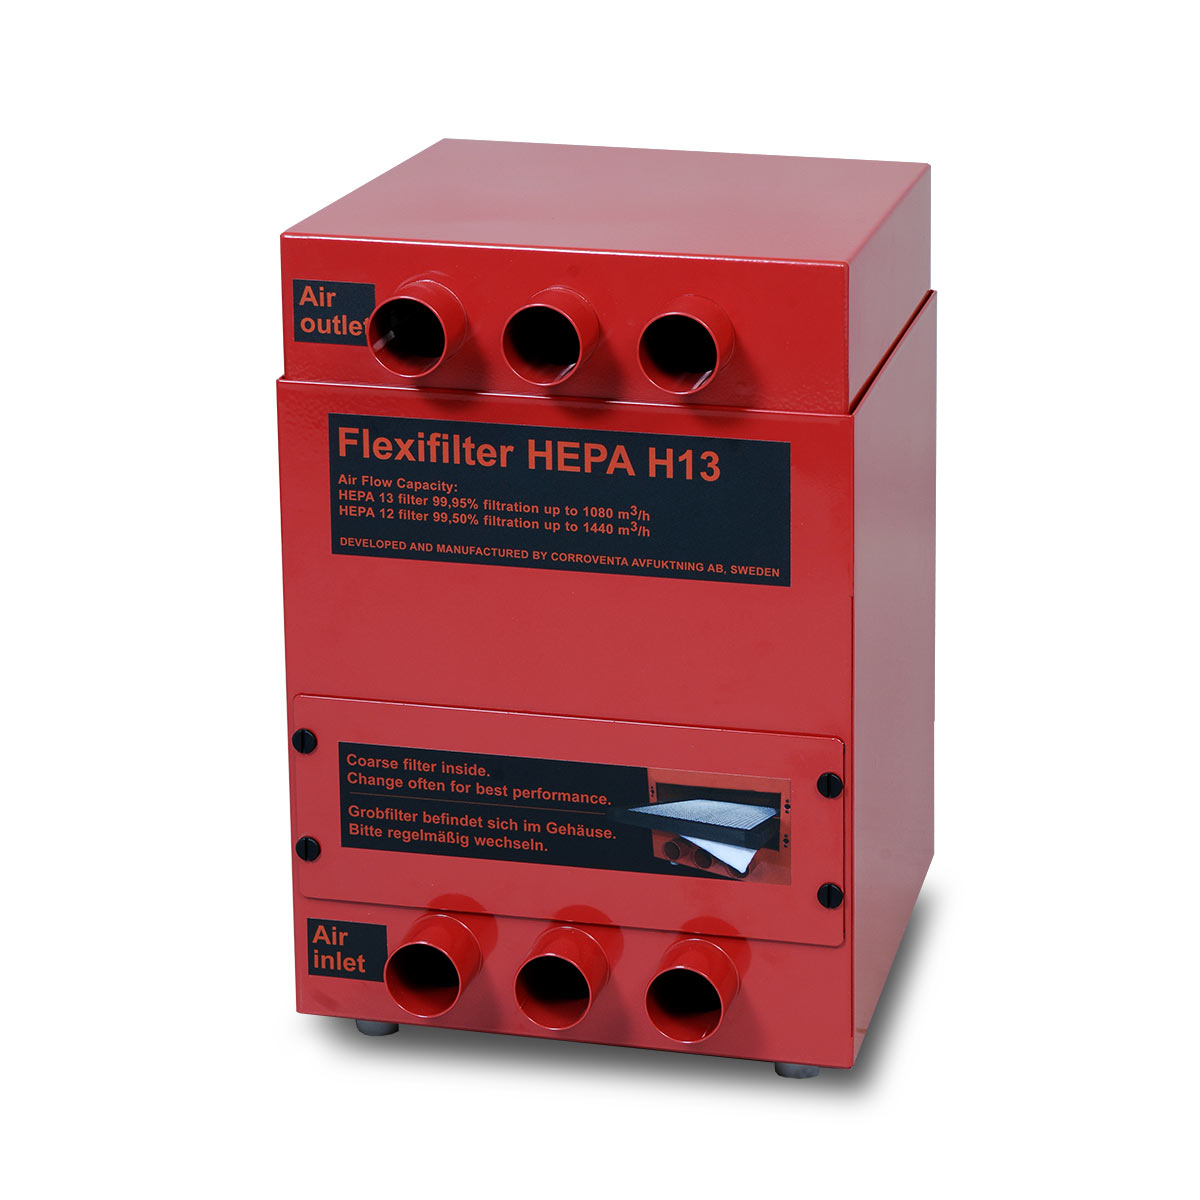 HEPA Filter, Flexifilter HEPA H13